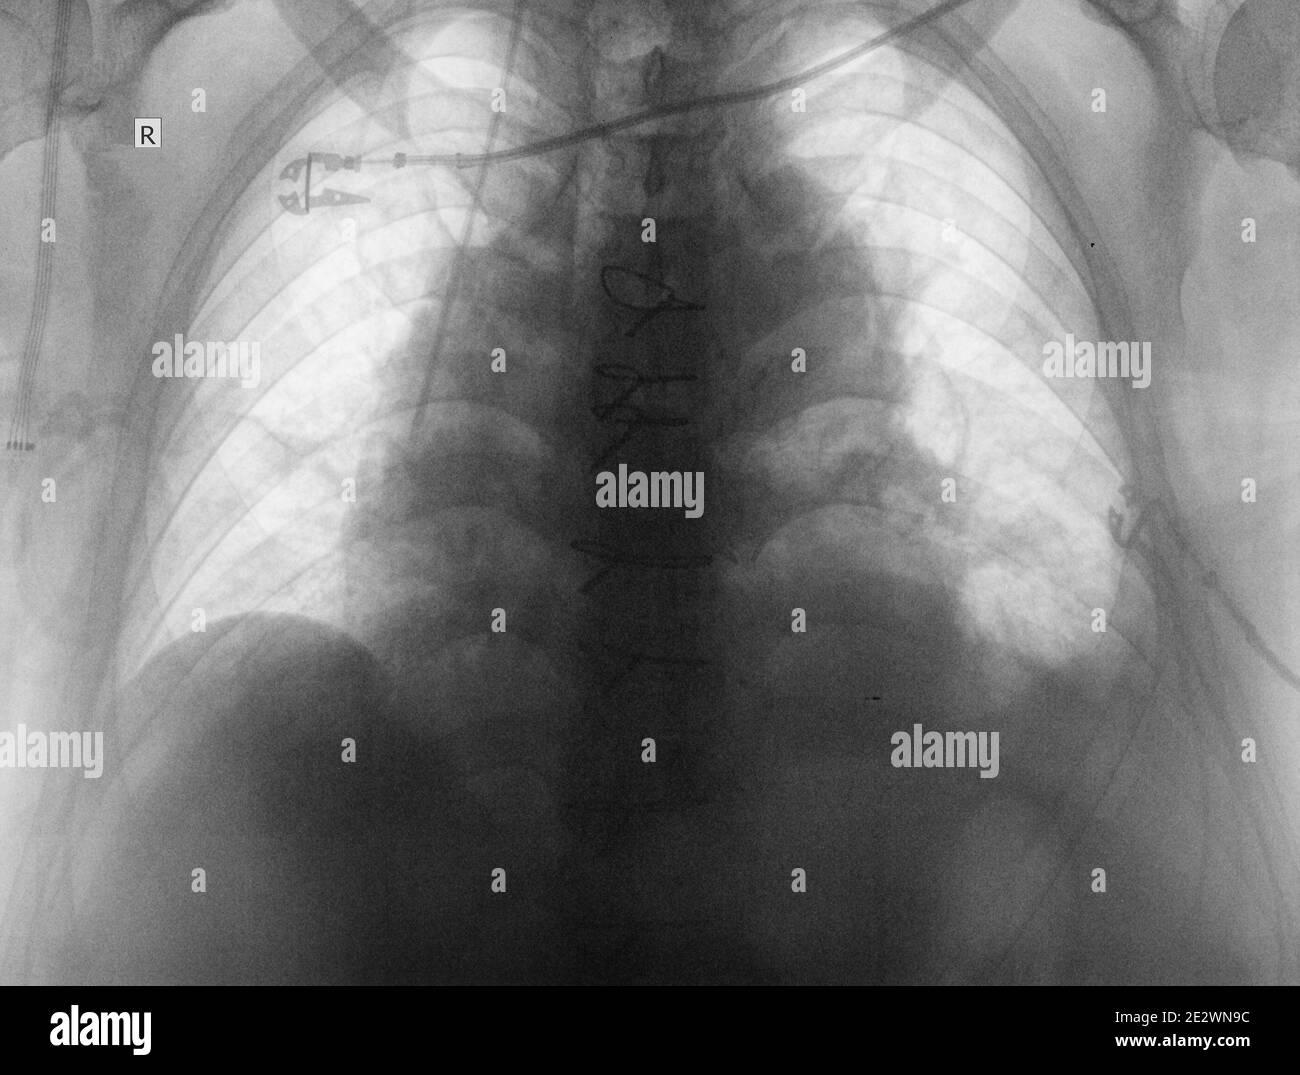 Radiograph of thoracic cavity organs. Stock Photo